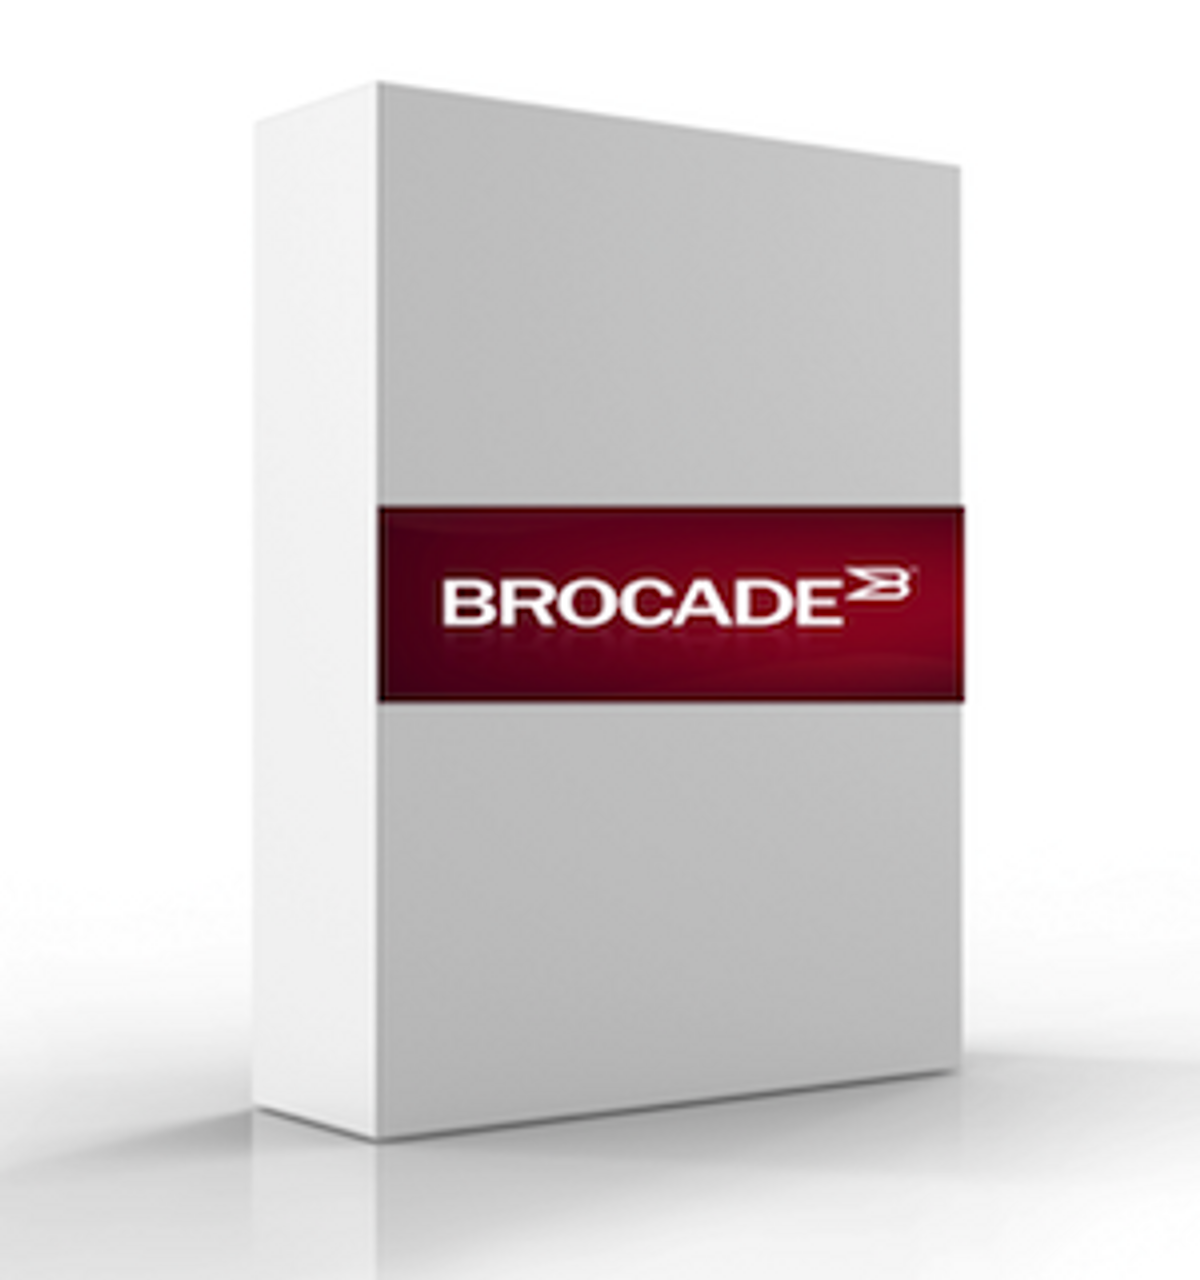 BR-SMEDTRK-01 - BROCADE 200E ISL-TRUNKING LICENSE